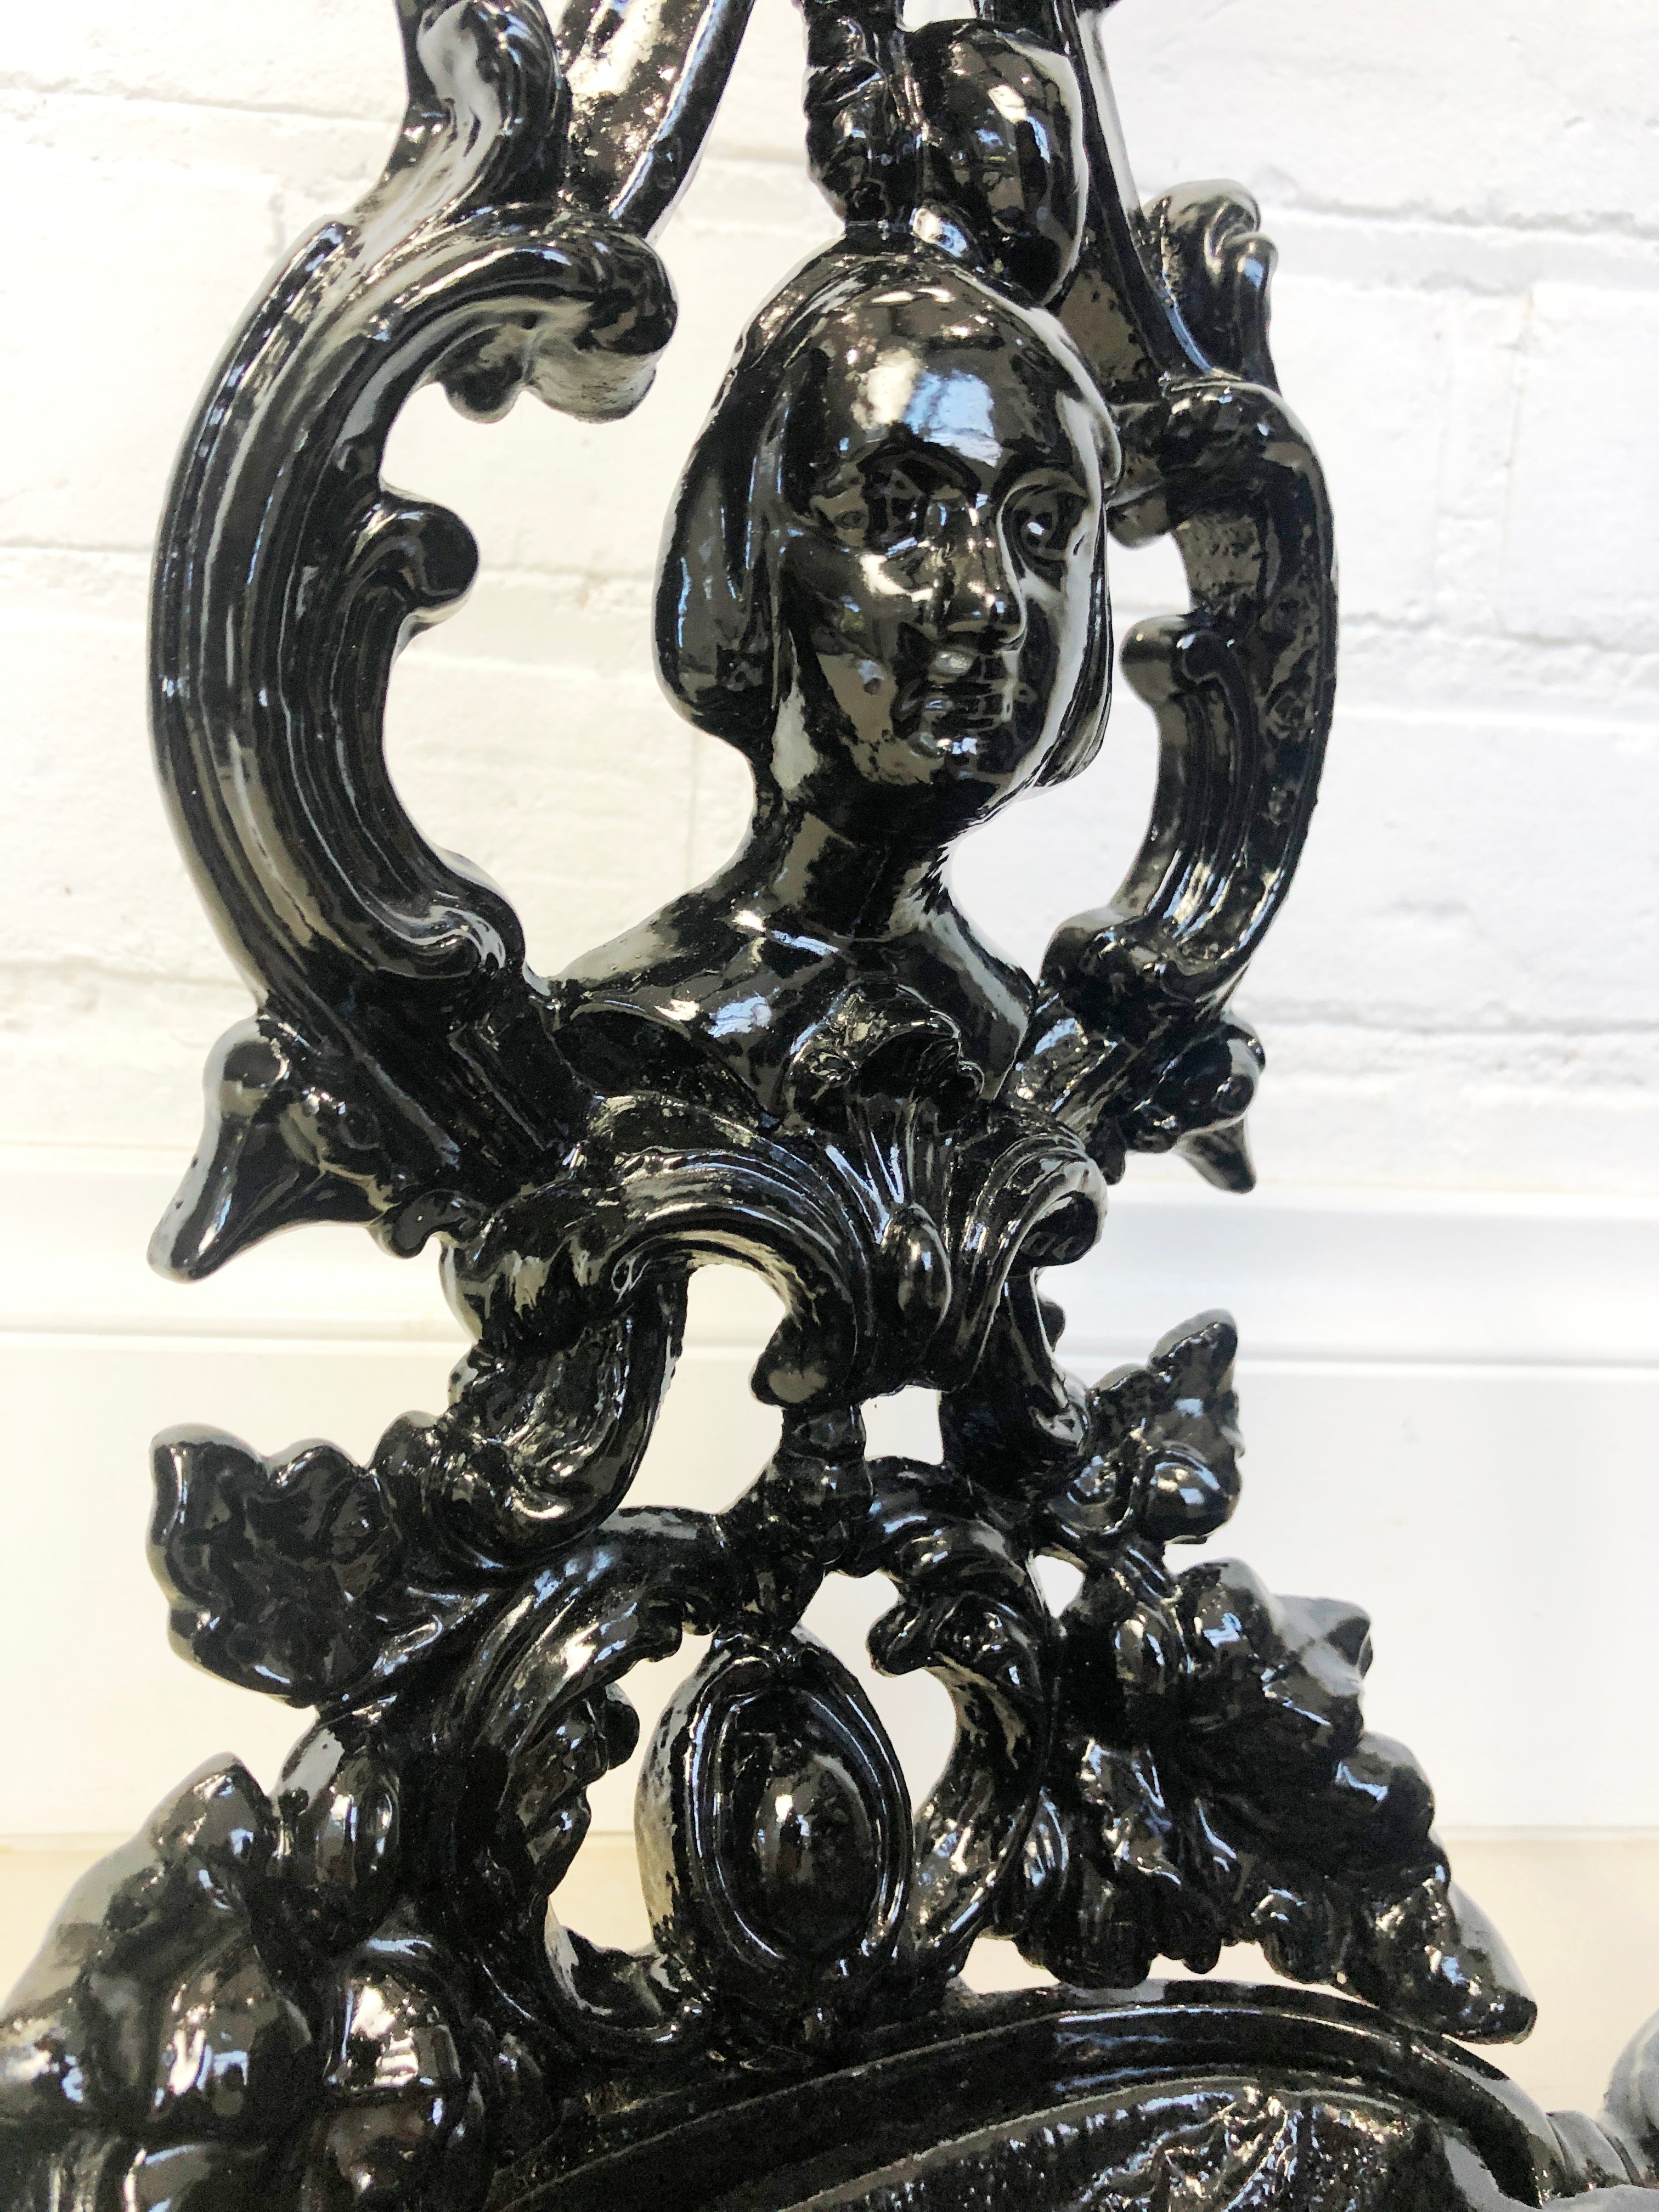 Coalbrookdale Ornate Black Iron Umbrella Stand | eXibit collection